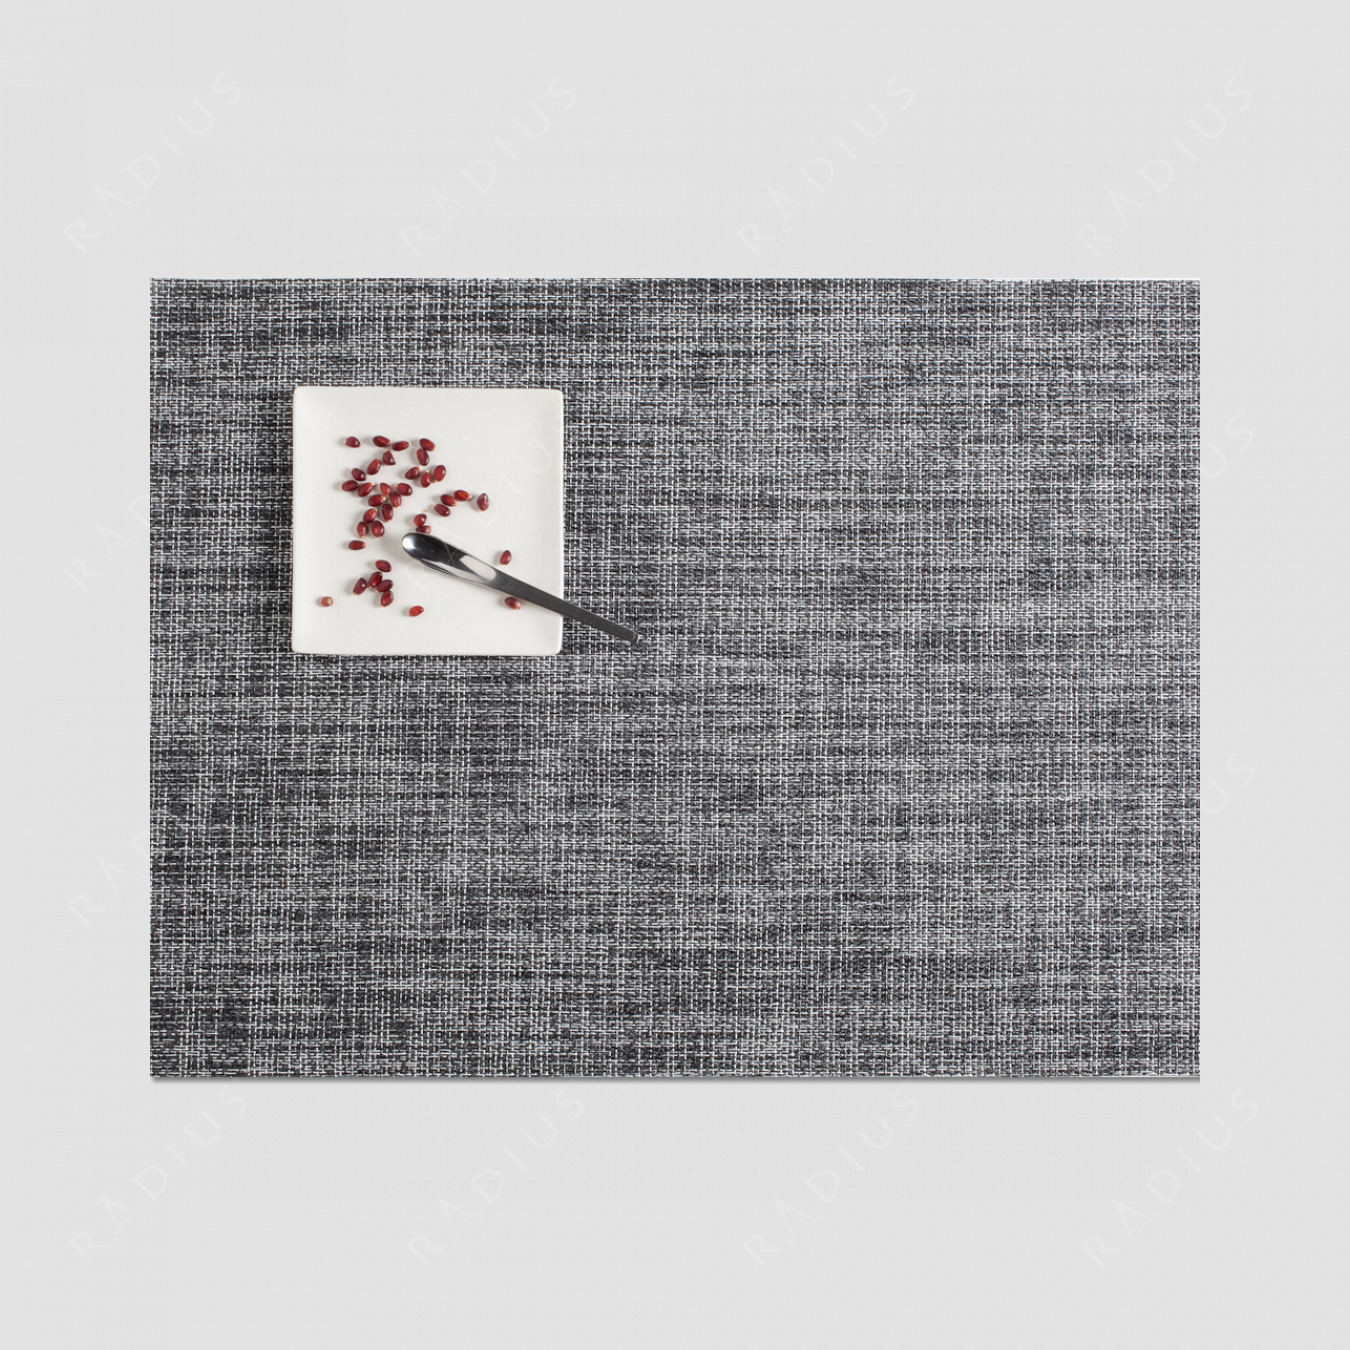 Салфетка подстановочная, жаккардовое плетение, винил, (36х48) Black+White, серия Boucle, CHILEWICH, США